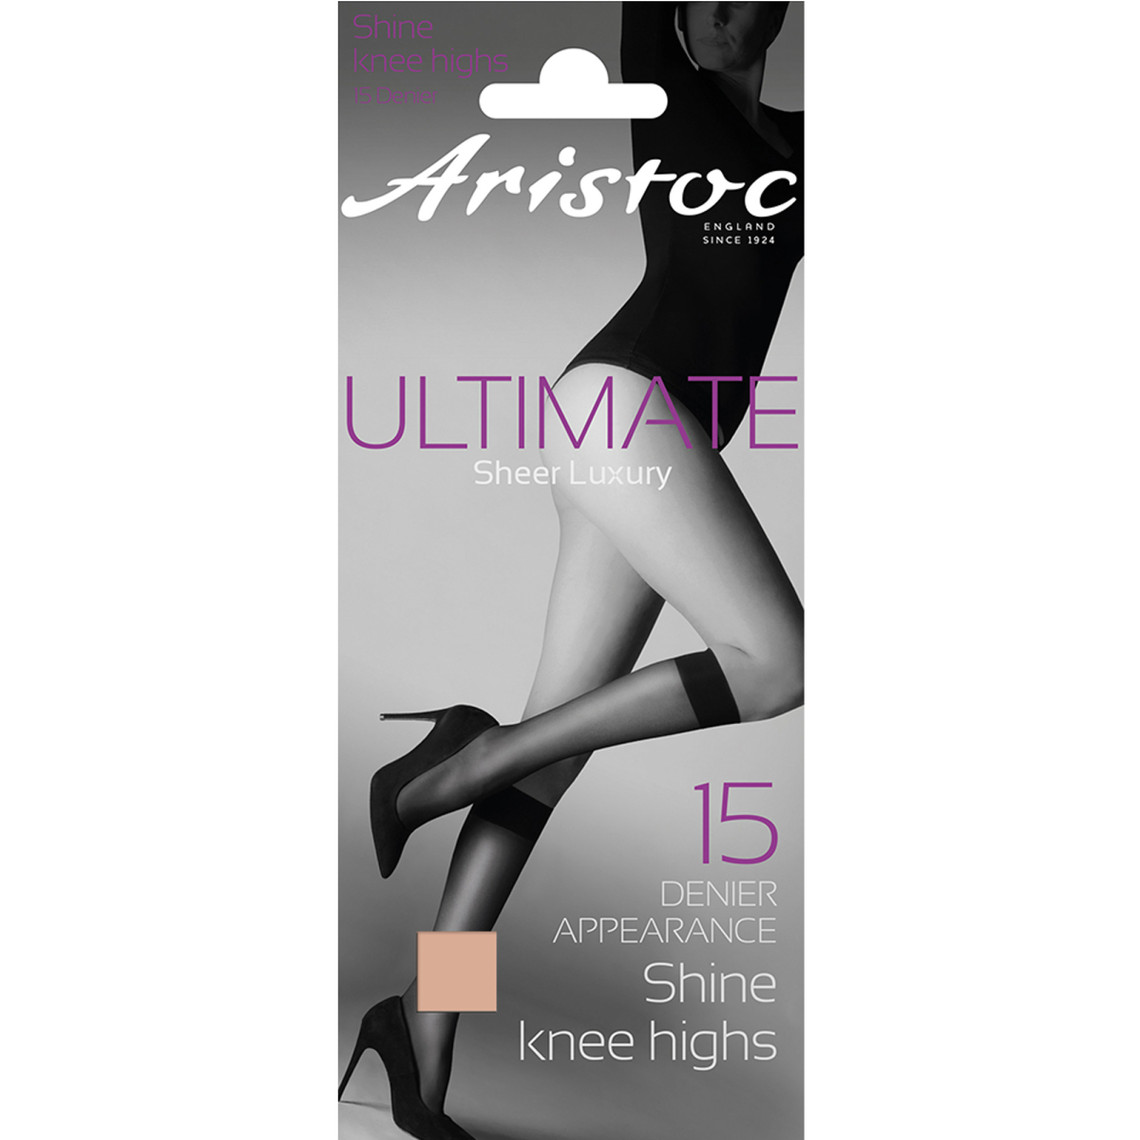 mi-bas 15d aristoc ultimate nude en nylon